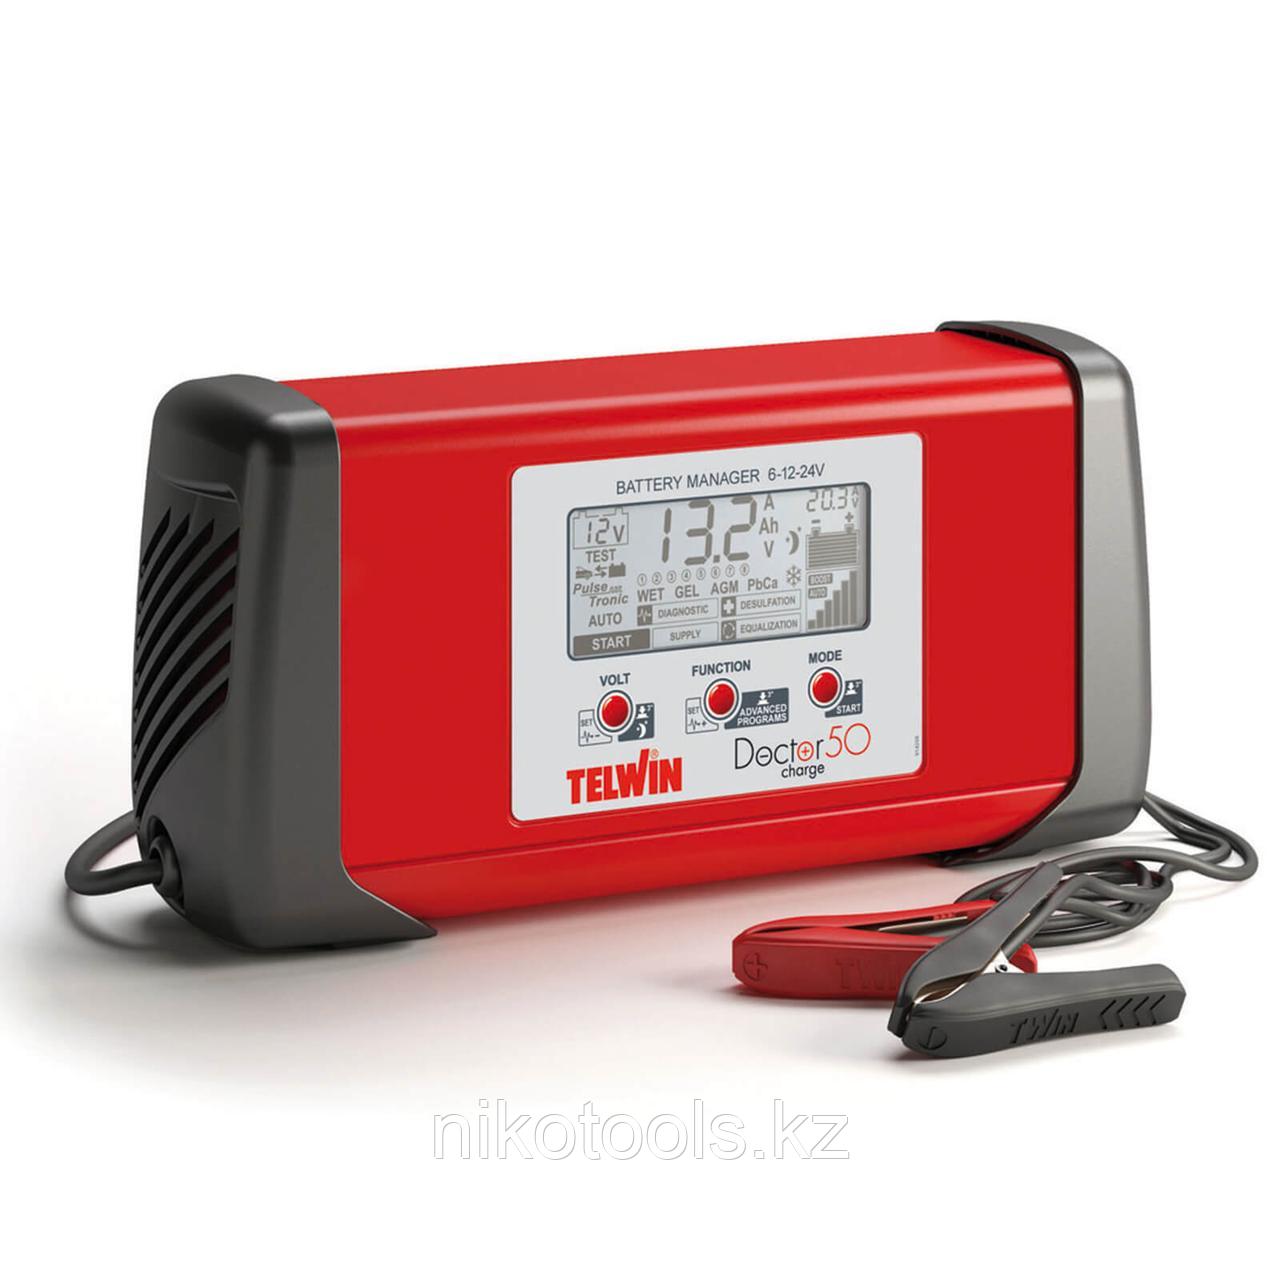 Зарядно-пусковое устройство Telwin Doctor Charge 50 230V 6-12-24V